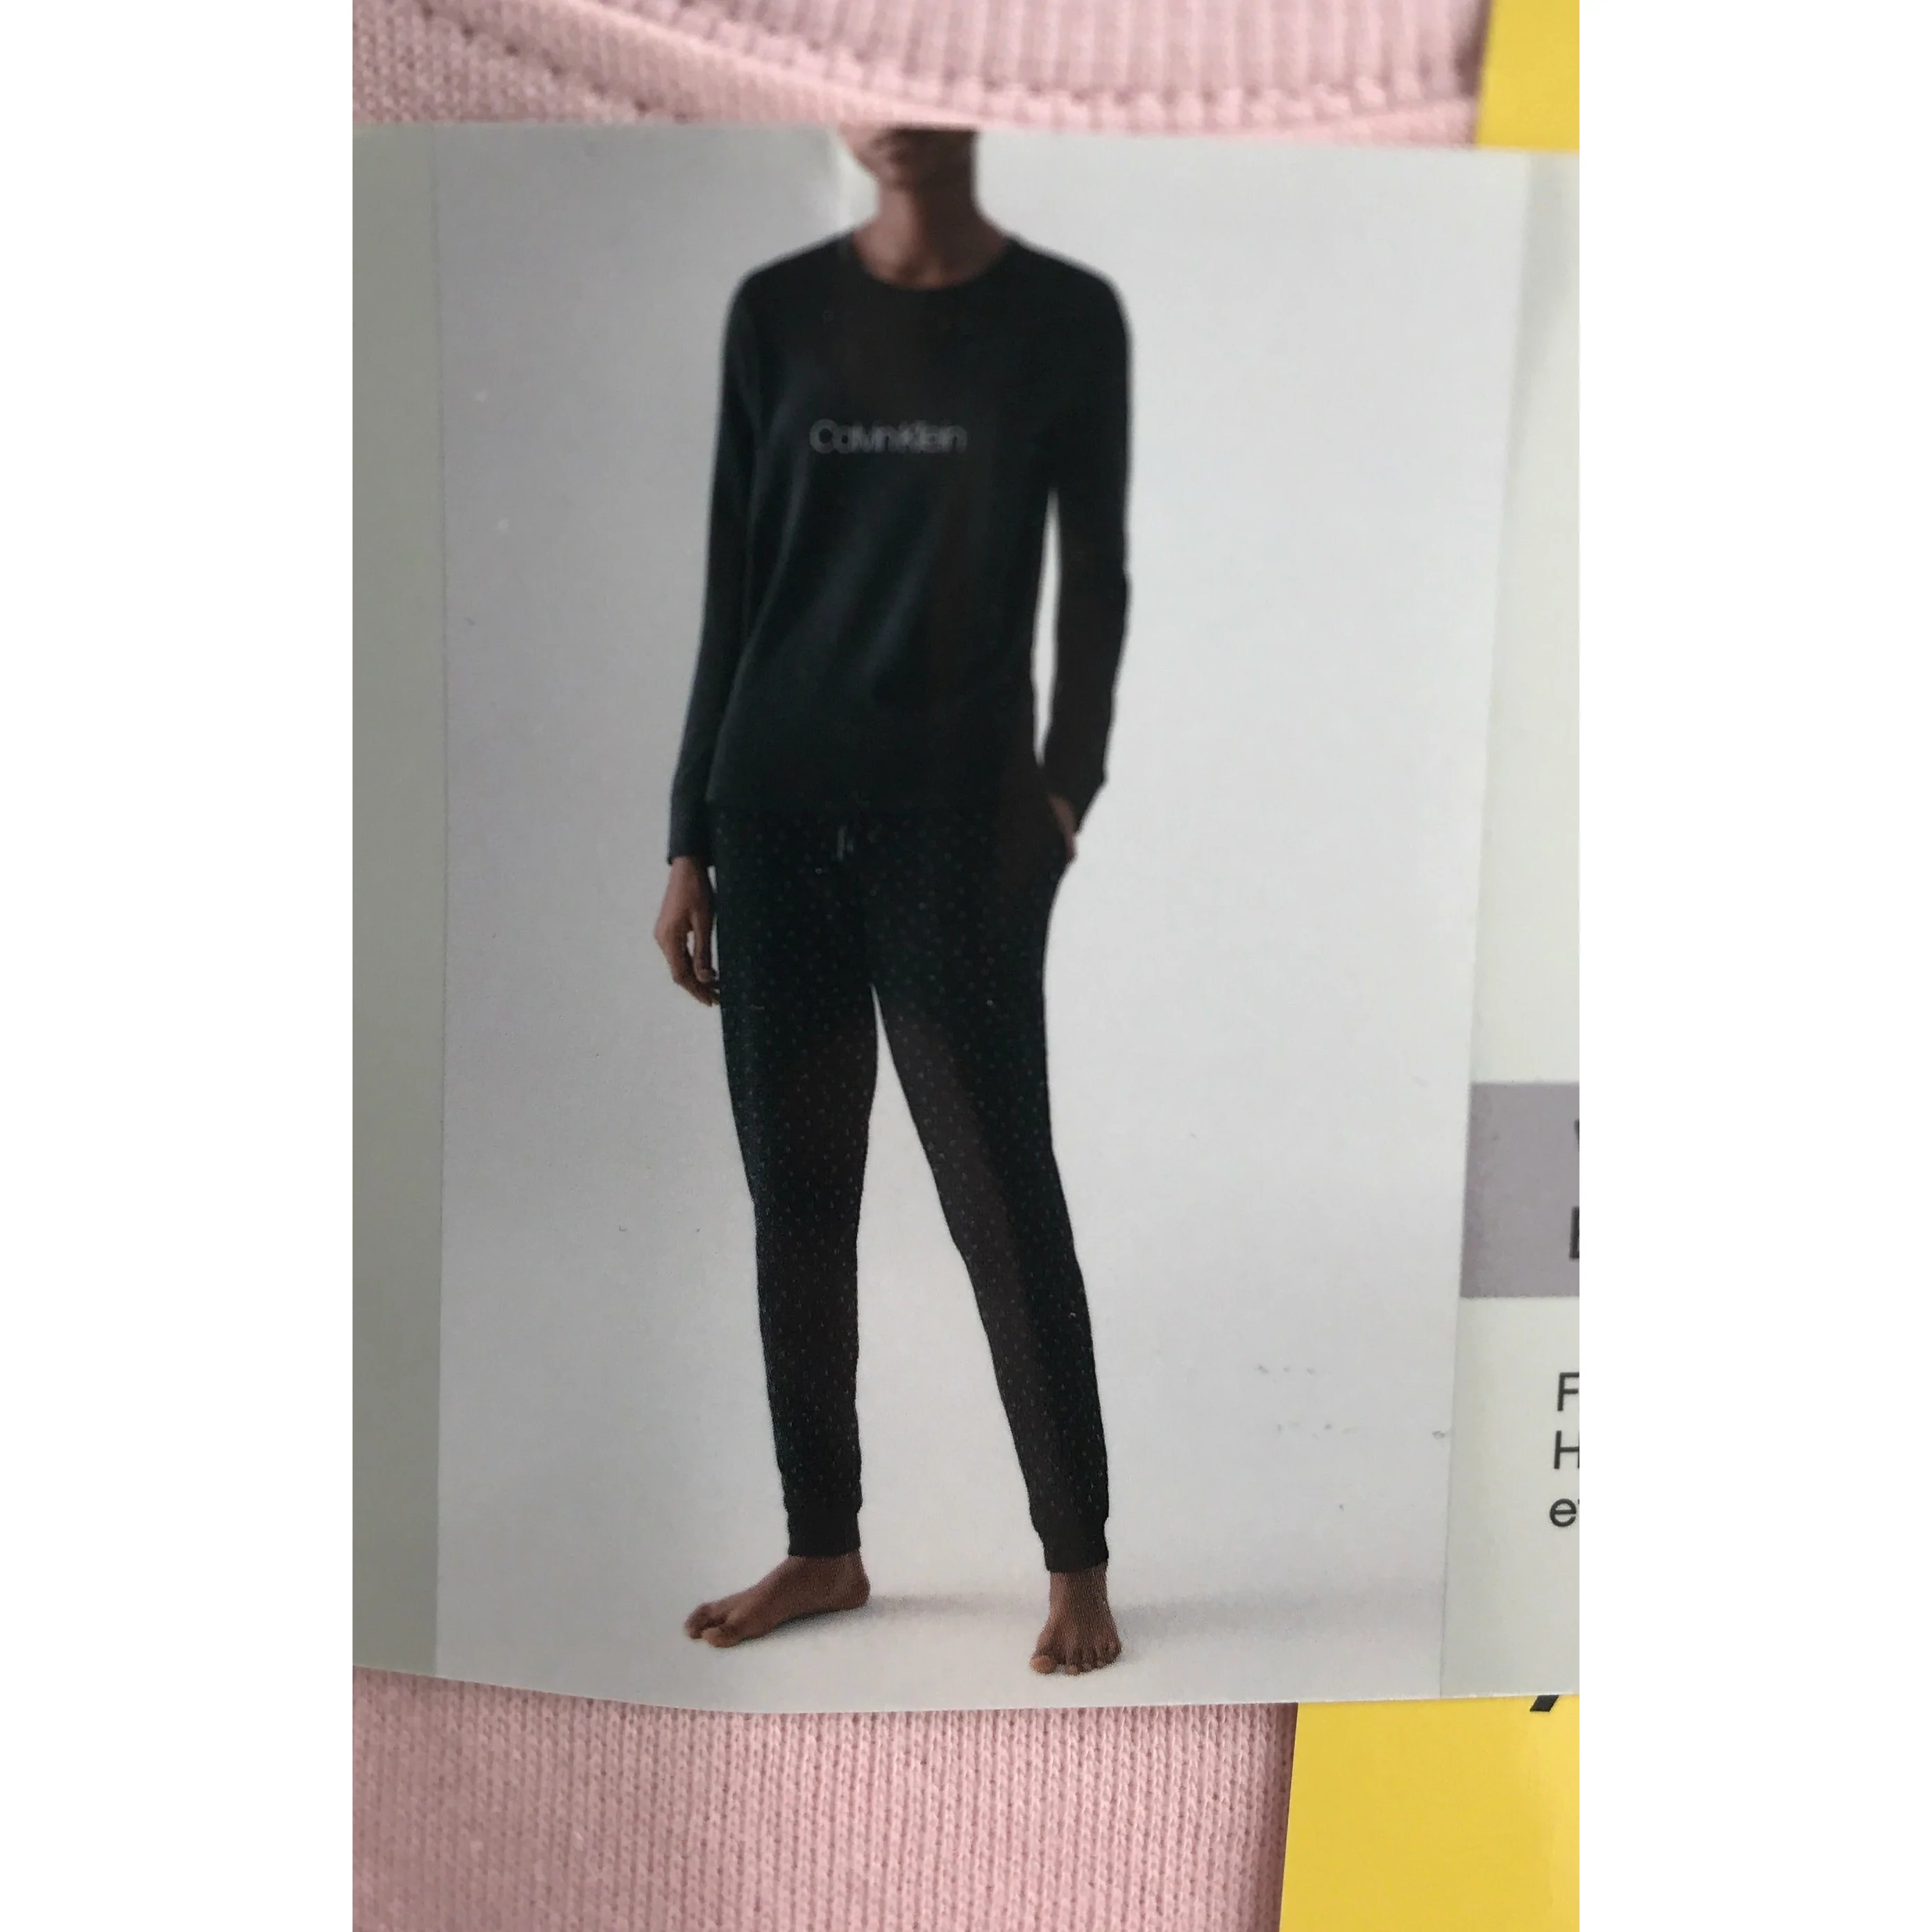 Calvin Klein Women's Pajama Set: Top & Bottom Set / Pink / Various Sizes